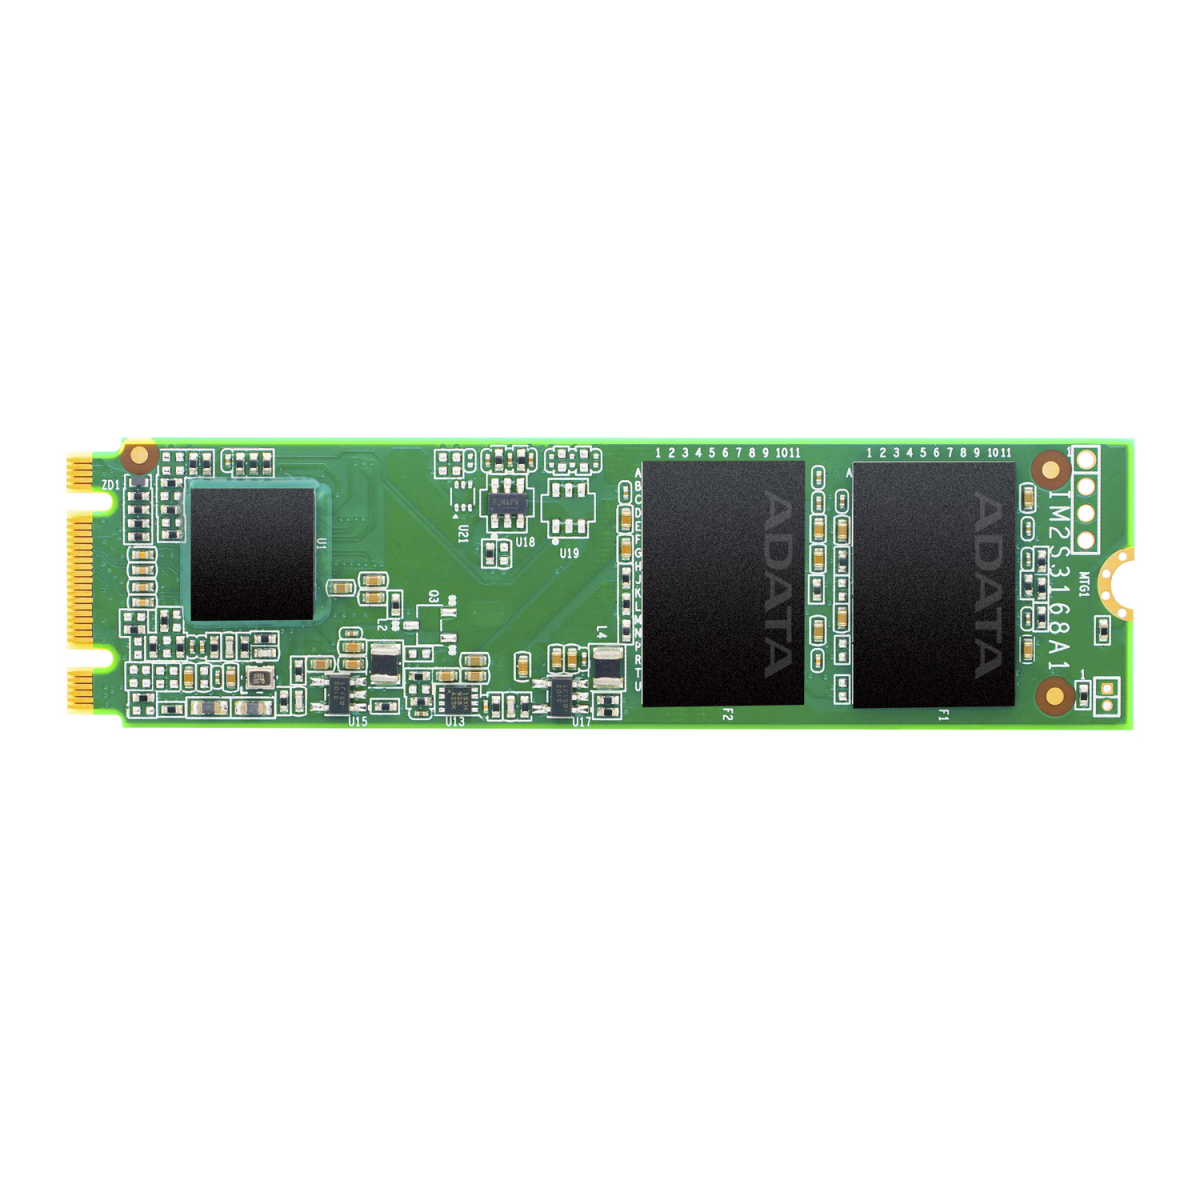 SSD Adata Ultimate SU650 120GB , M.2, Leitura 550MBs e Gravação 510MBs, ASU650NS38-120GT-C